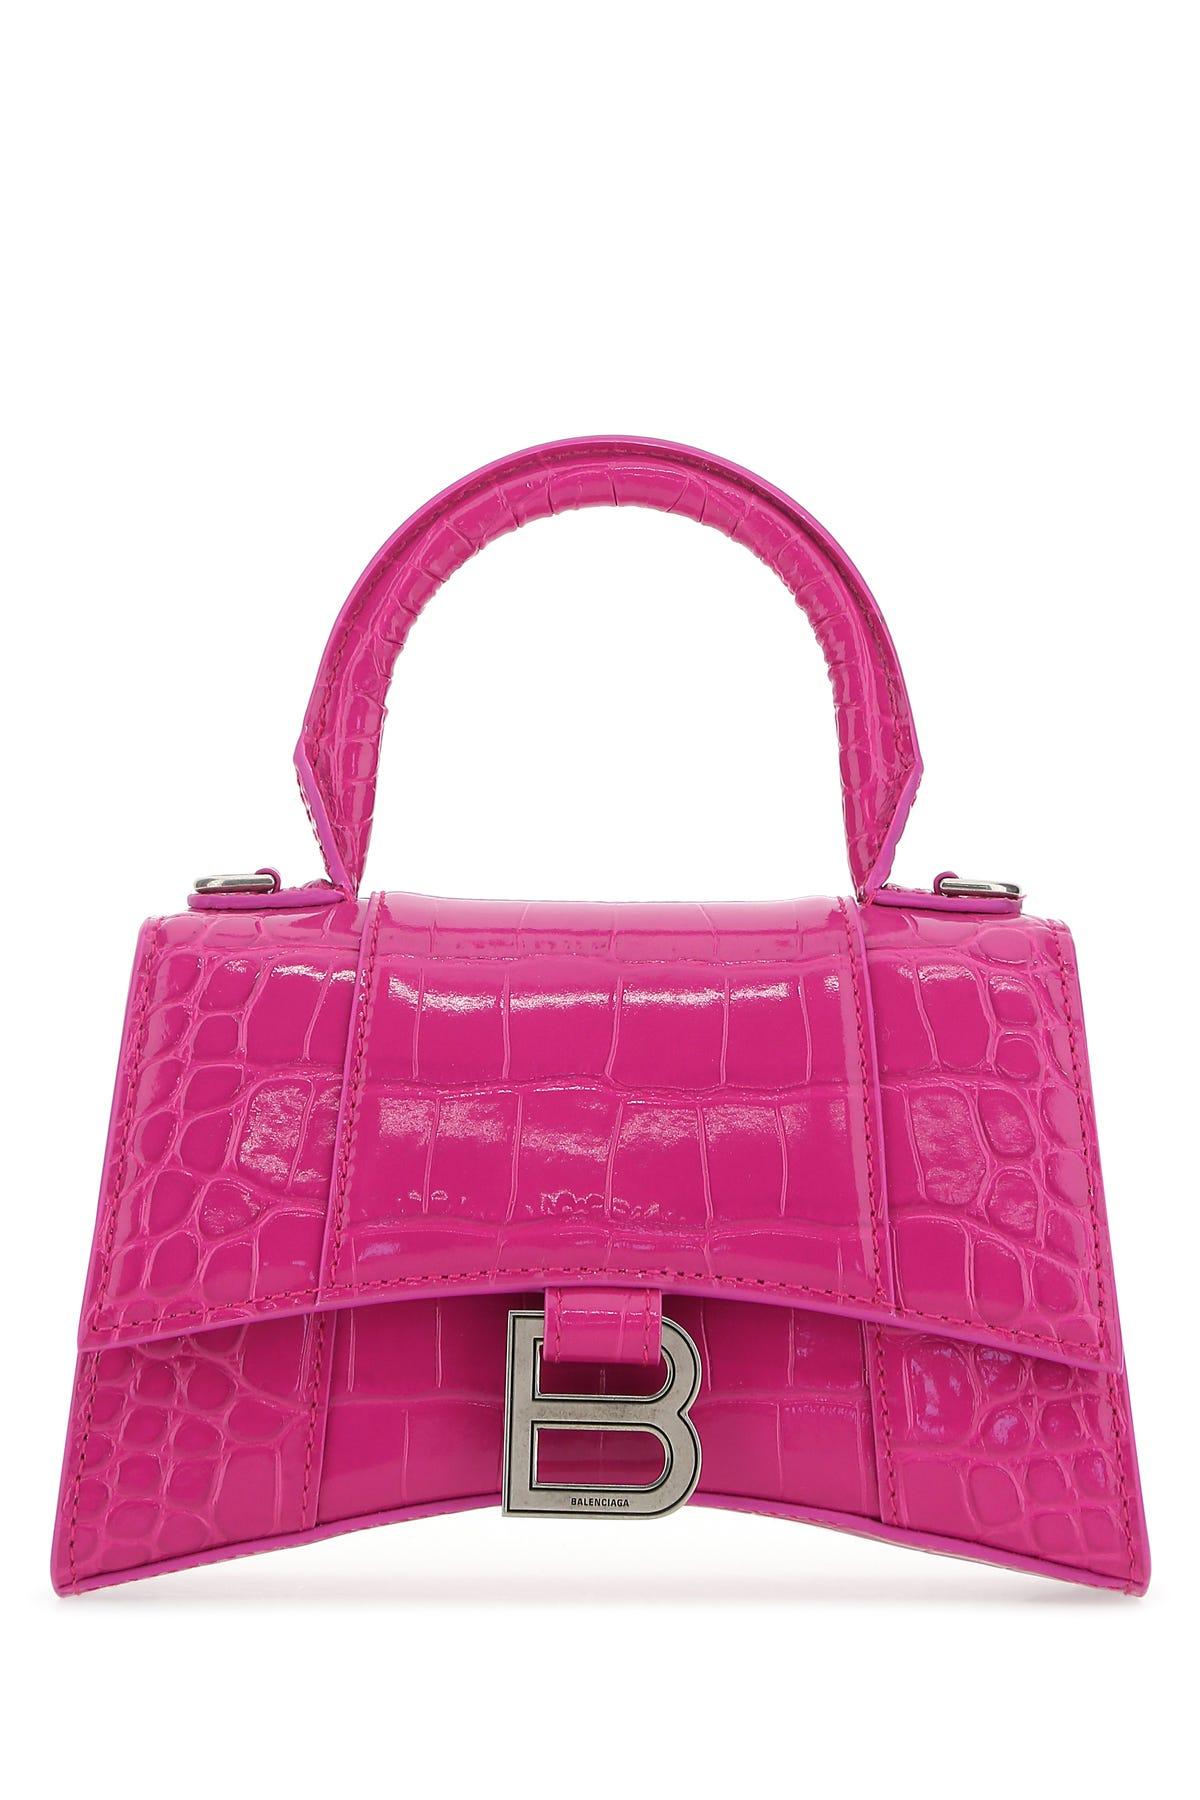 Balenciaga Pink Croc Xs Hourglass Top Handle Bag